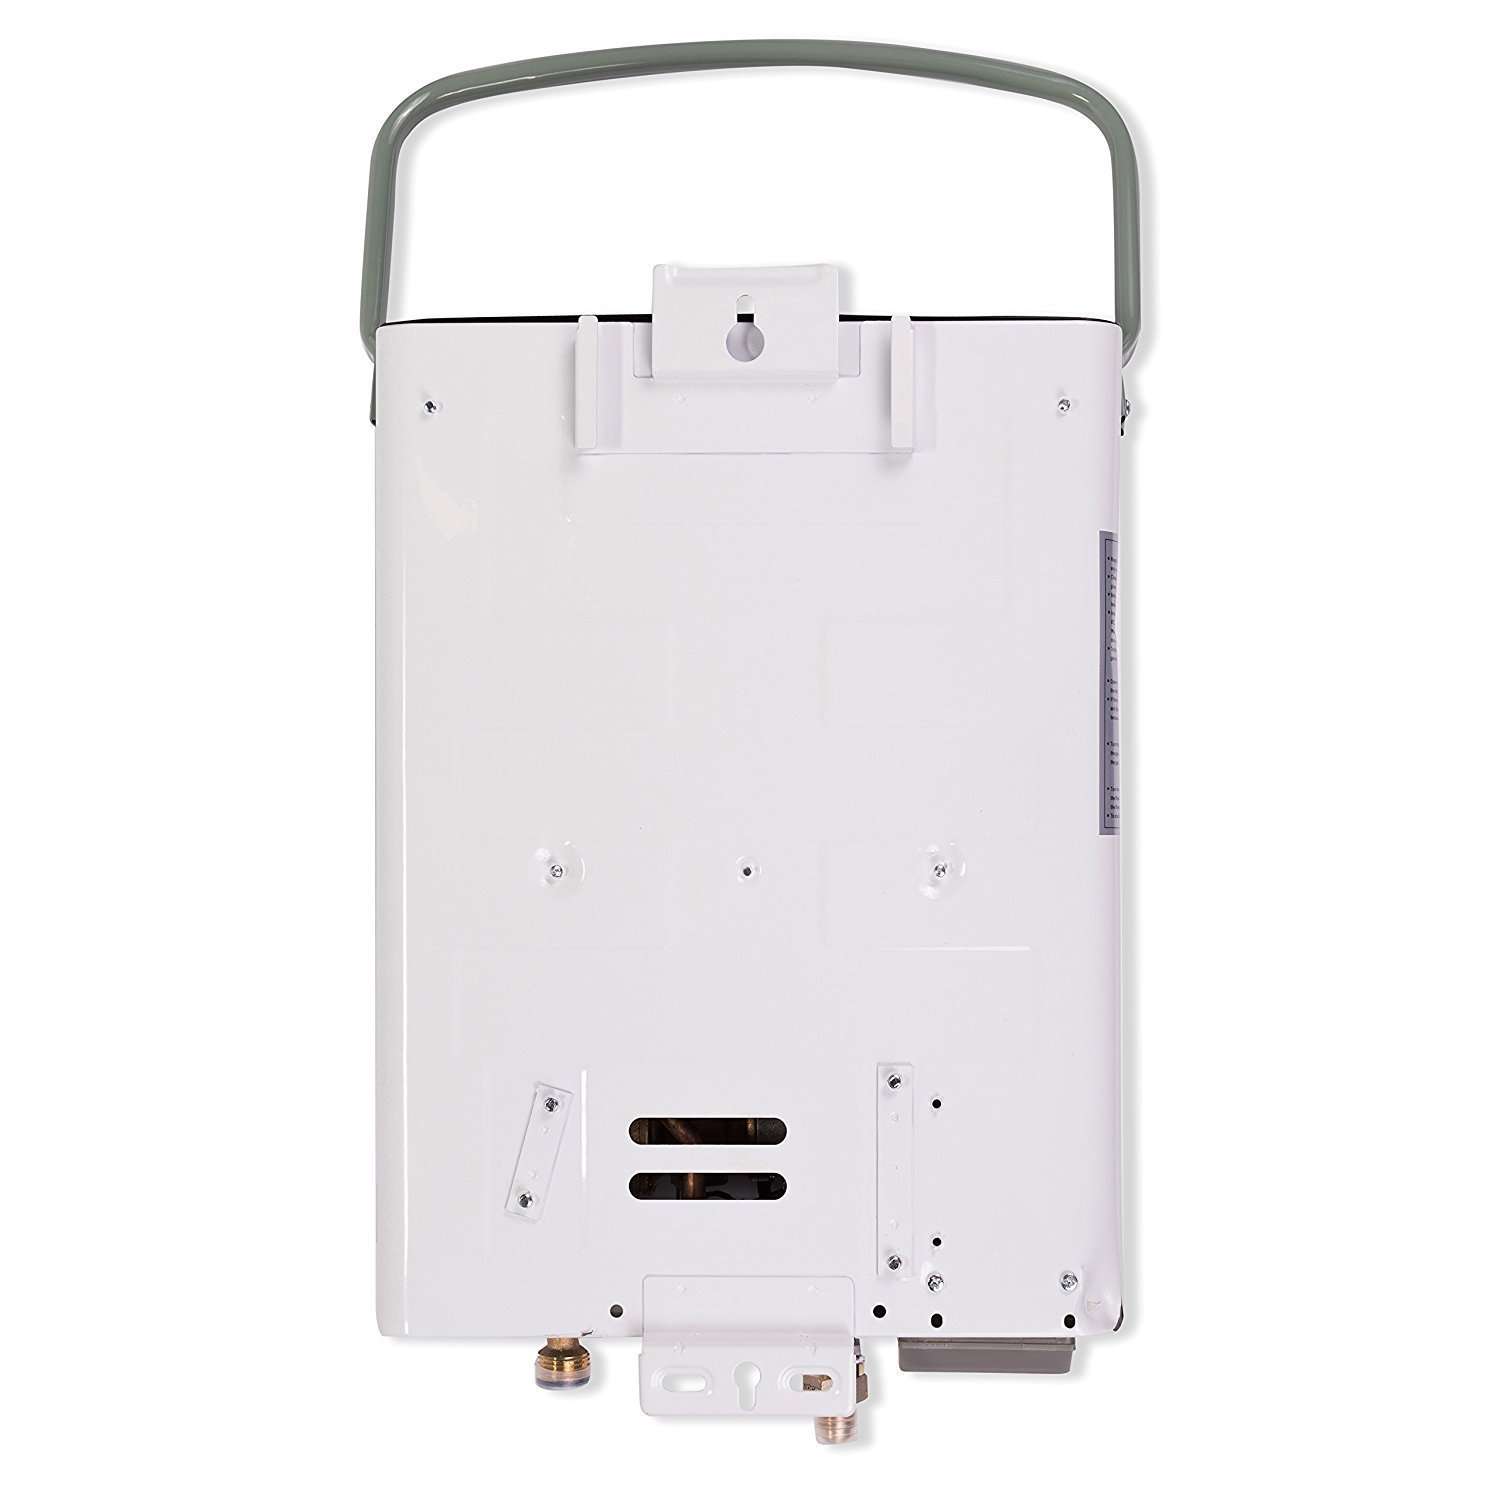 Eccotemp, Eccotemp L5 1.5 GPM Propane Tankless Water Heater w/ Flojet Pump Manufacturer RFB